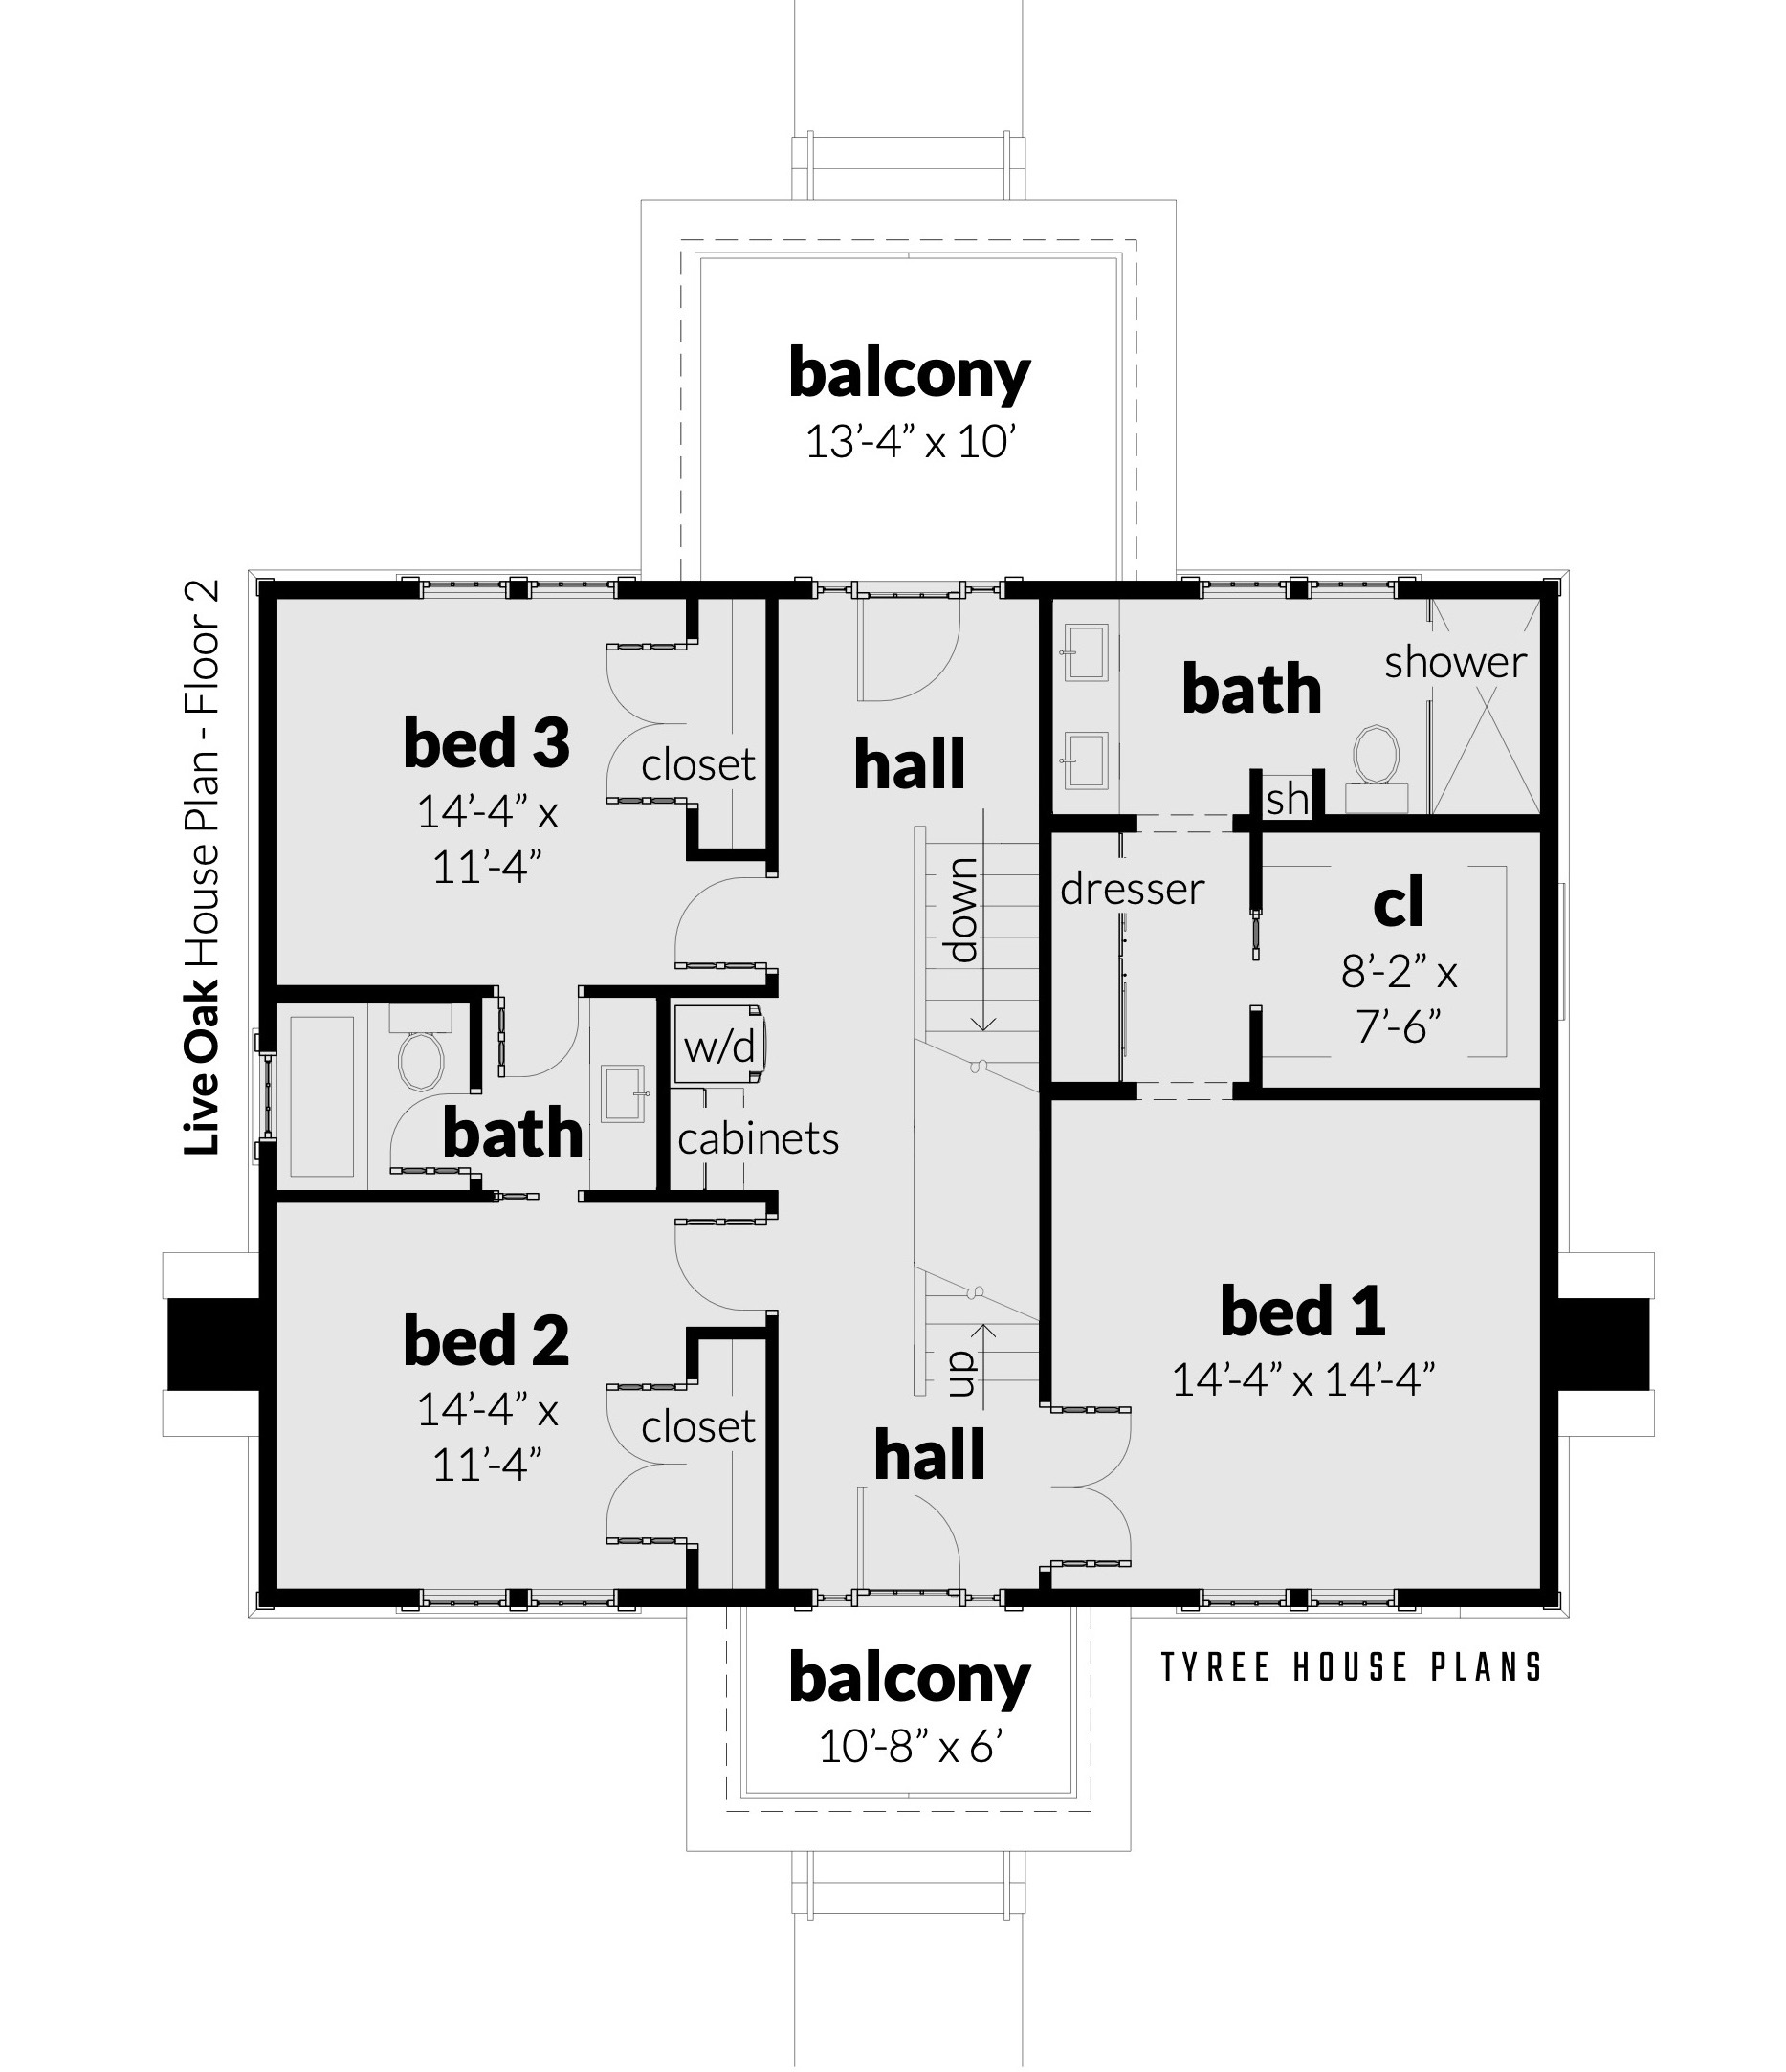 Floor 2 - Live Oak by Tyree House Plans